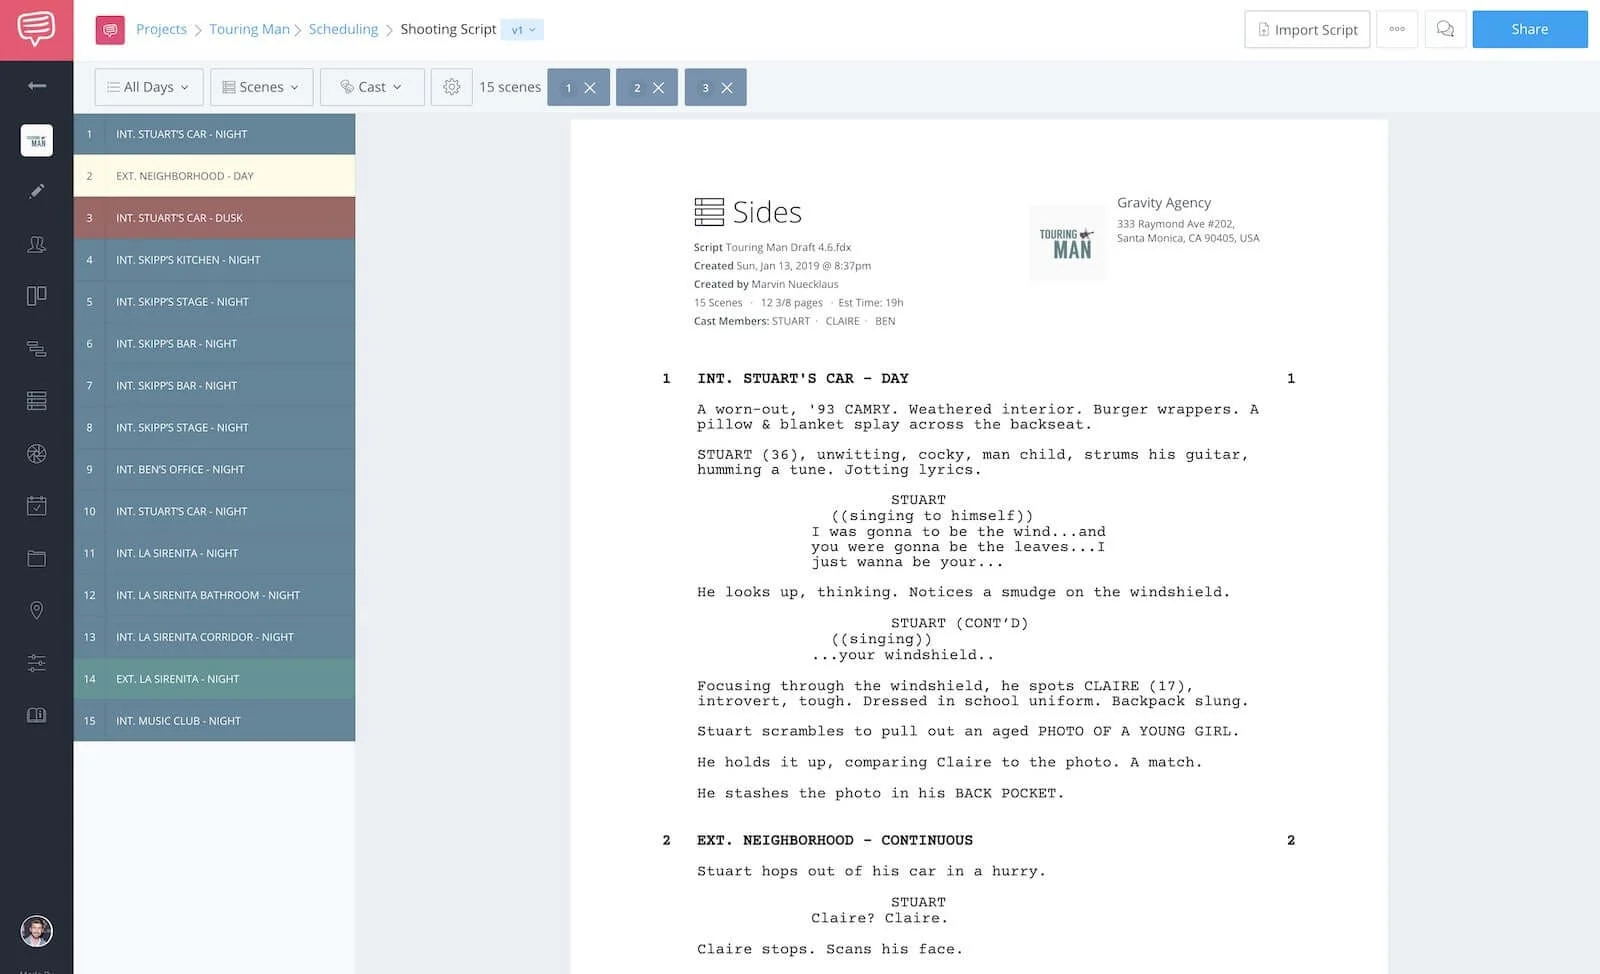 StudioBinder Film Scheduling Software - Create Script Sides Online